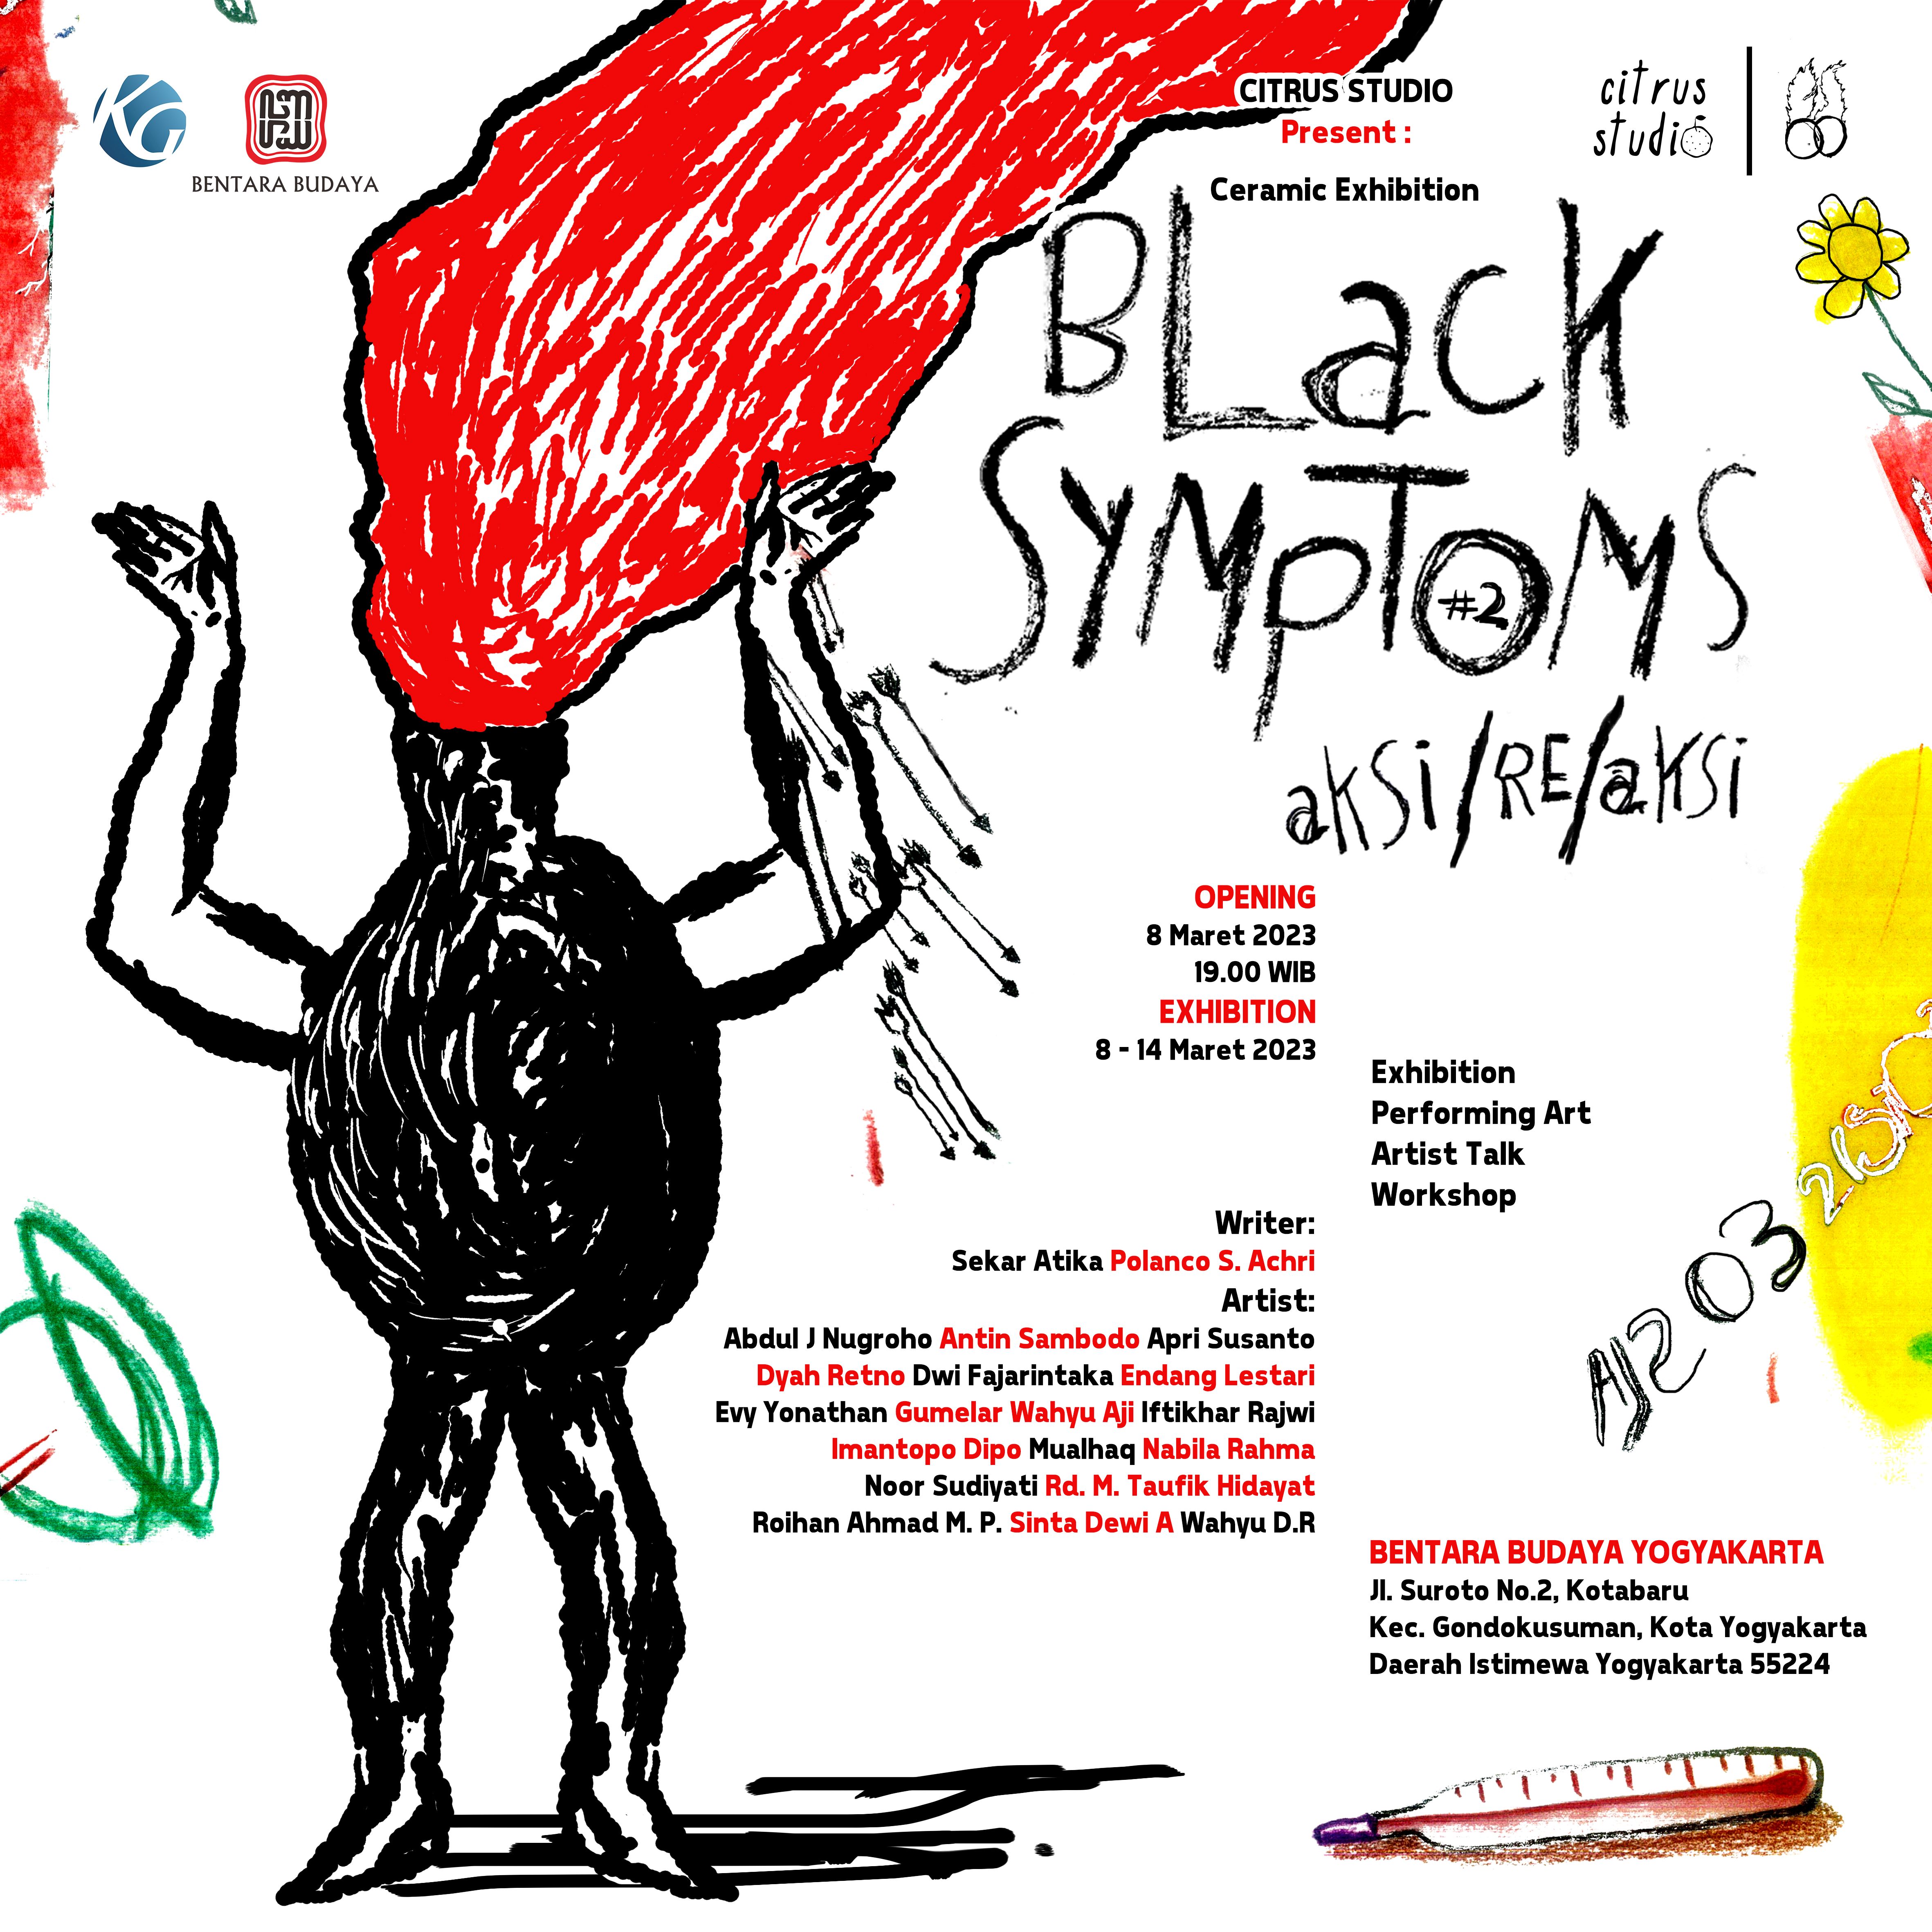 Black Symptoms #2 : Aksi Reaksi Ceramic Exhibition by Citrus Studio